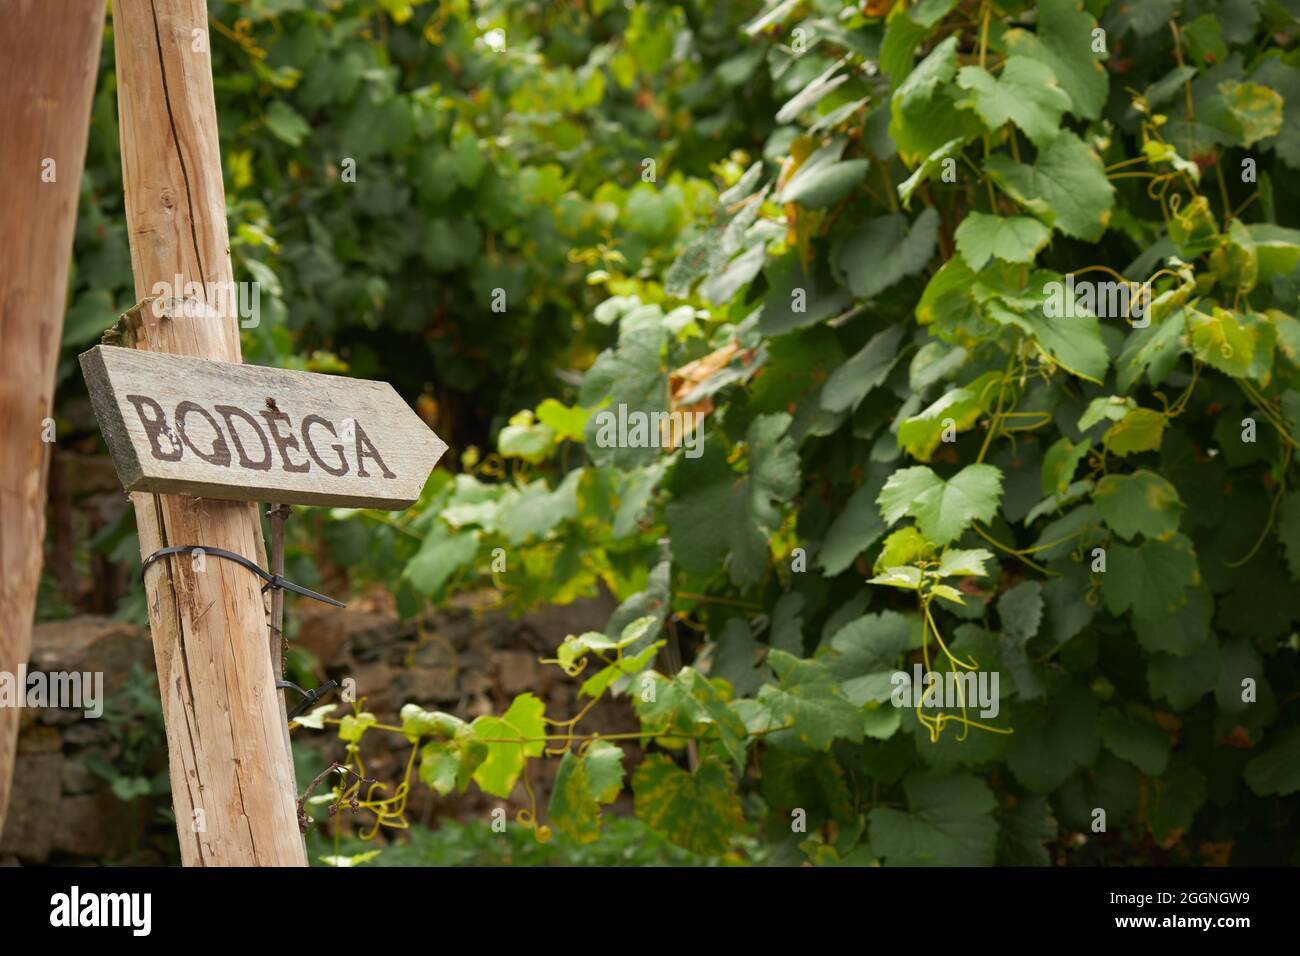 cartel de madera indicando bodega junto viñedos de uva para hacer vino Stock Photo